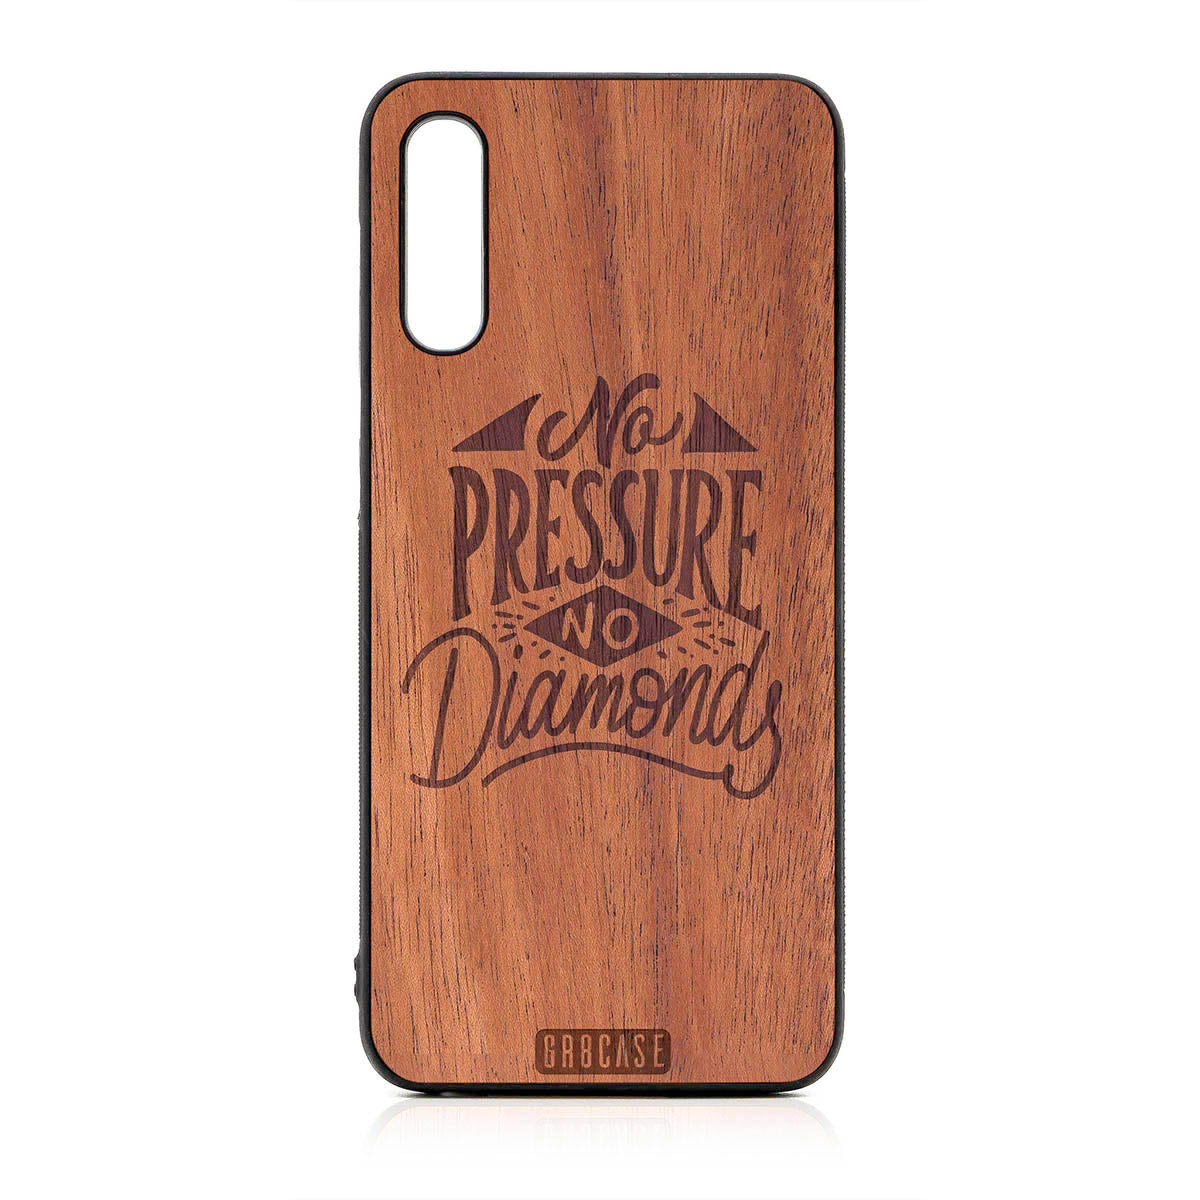 No Pressure No Diamonds Design Wood Case For Samsung Galaxy A50